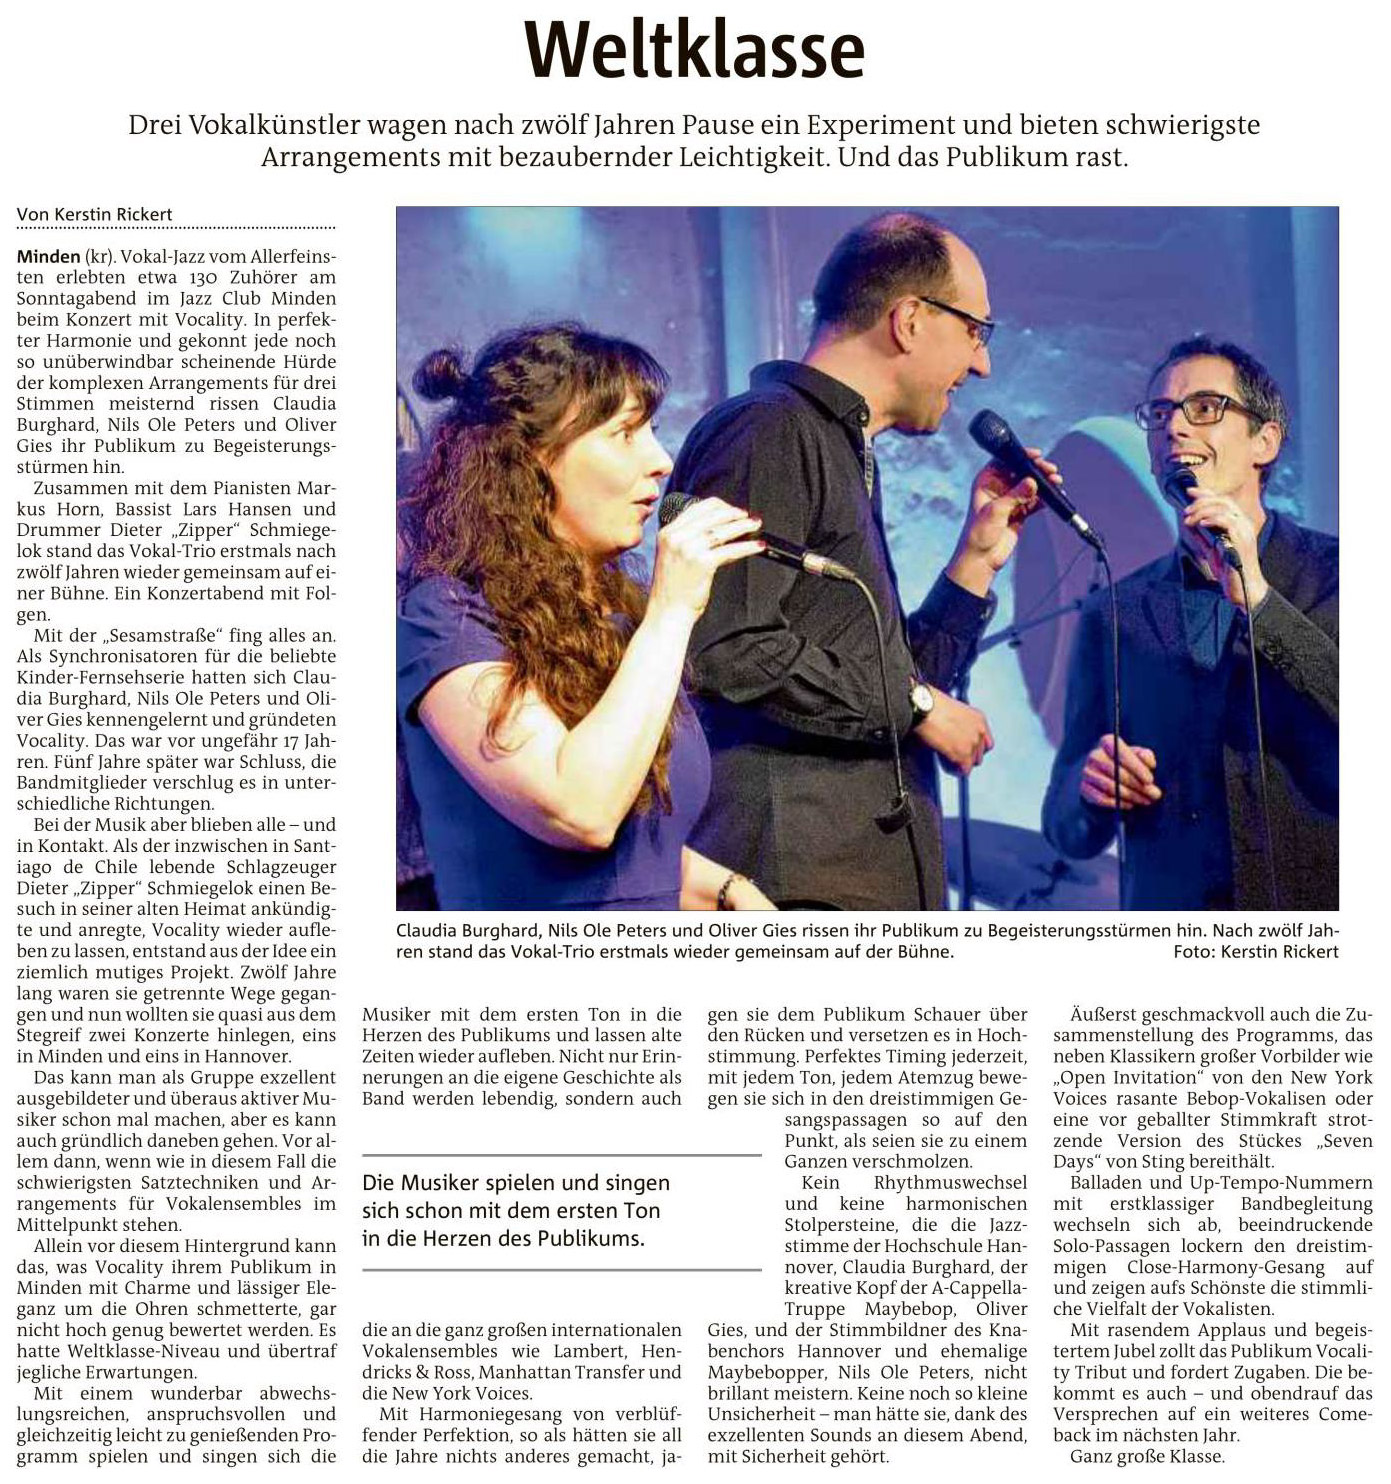 © Copyright: Mindener Tageblatt, 02.03.2017, www.mt.de